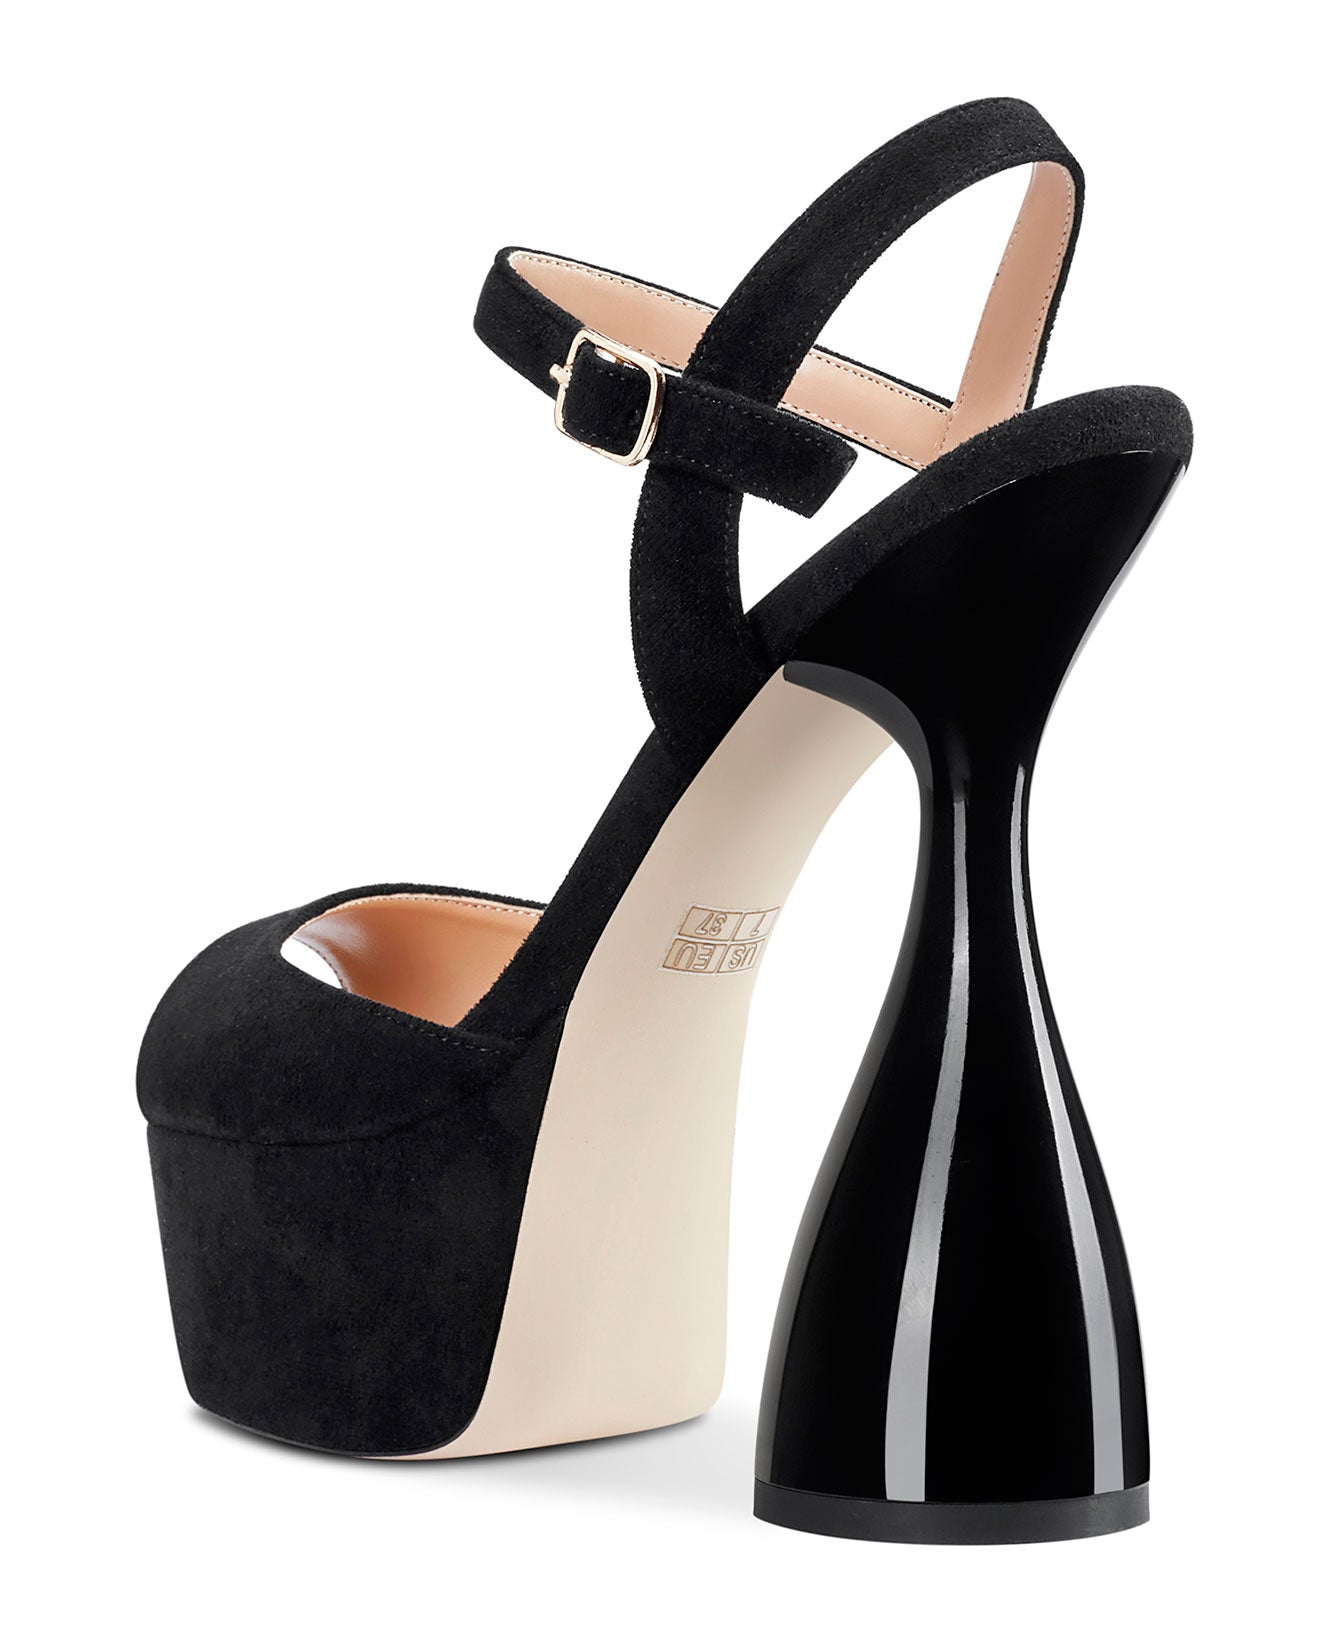 CASTAMERE Women's Chunky High Heels Platform Fashion Party Sandals Peep-Toe Ankel-Strap Sandal 6Inch Heel Shoes for Wedding Dress